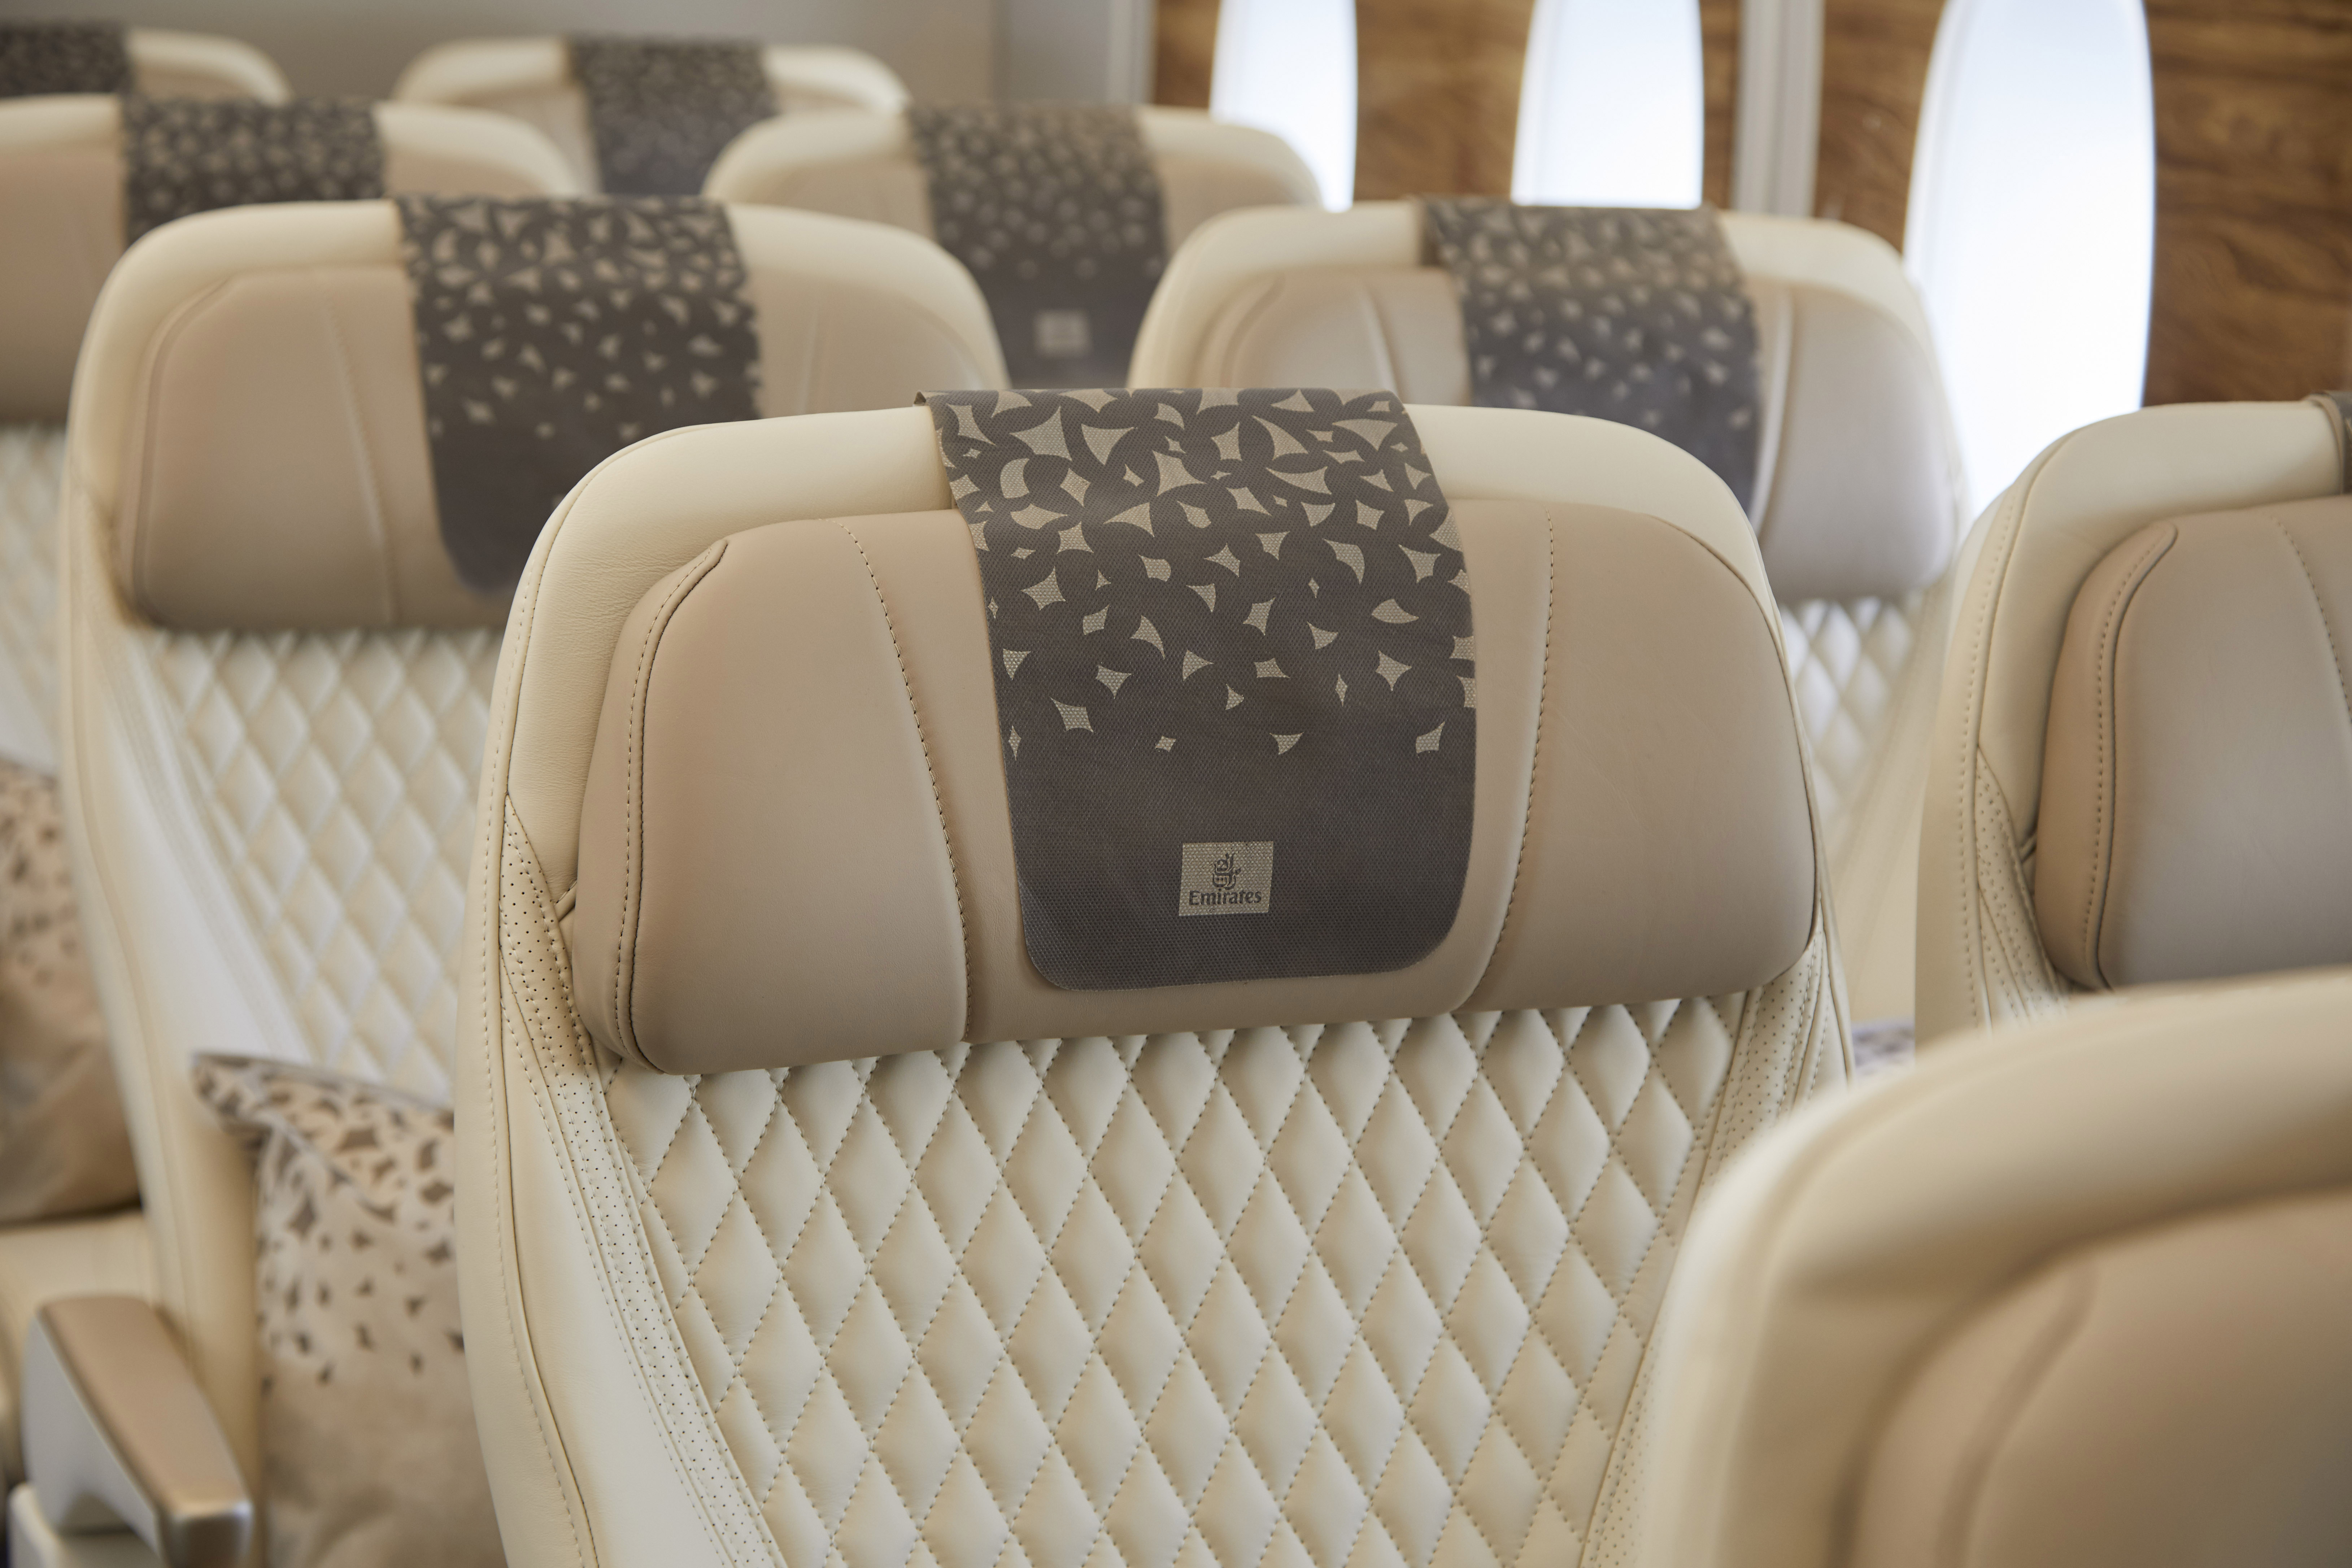 Emirates Premium Economy headrest